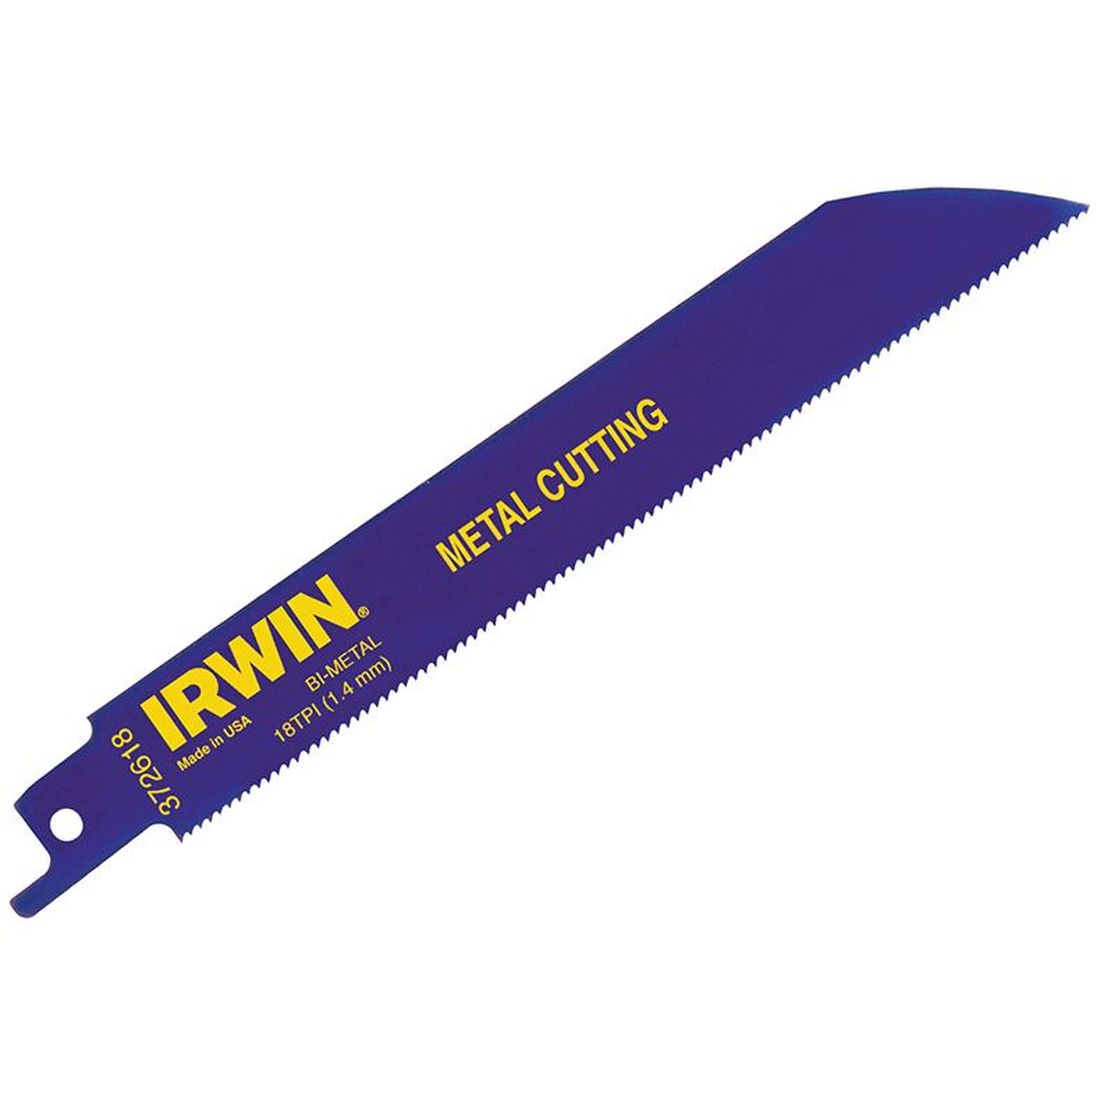 IRWIN 614R Bi-Metal Sabre Saw Blades for Metal Cutting 150mm Pack of 25               